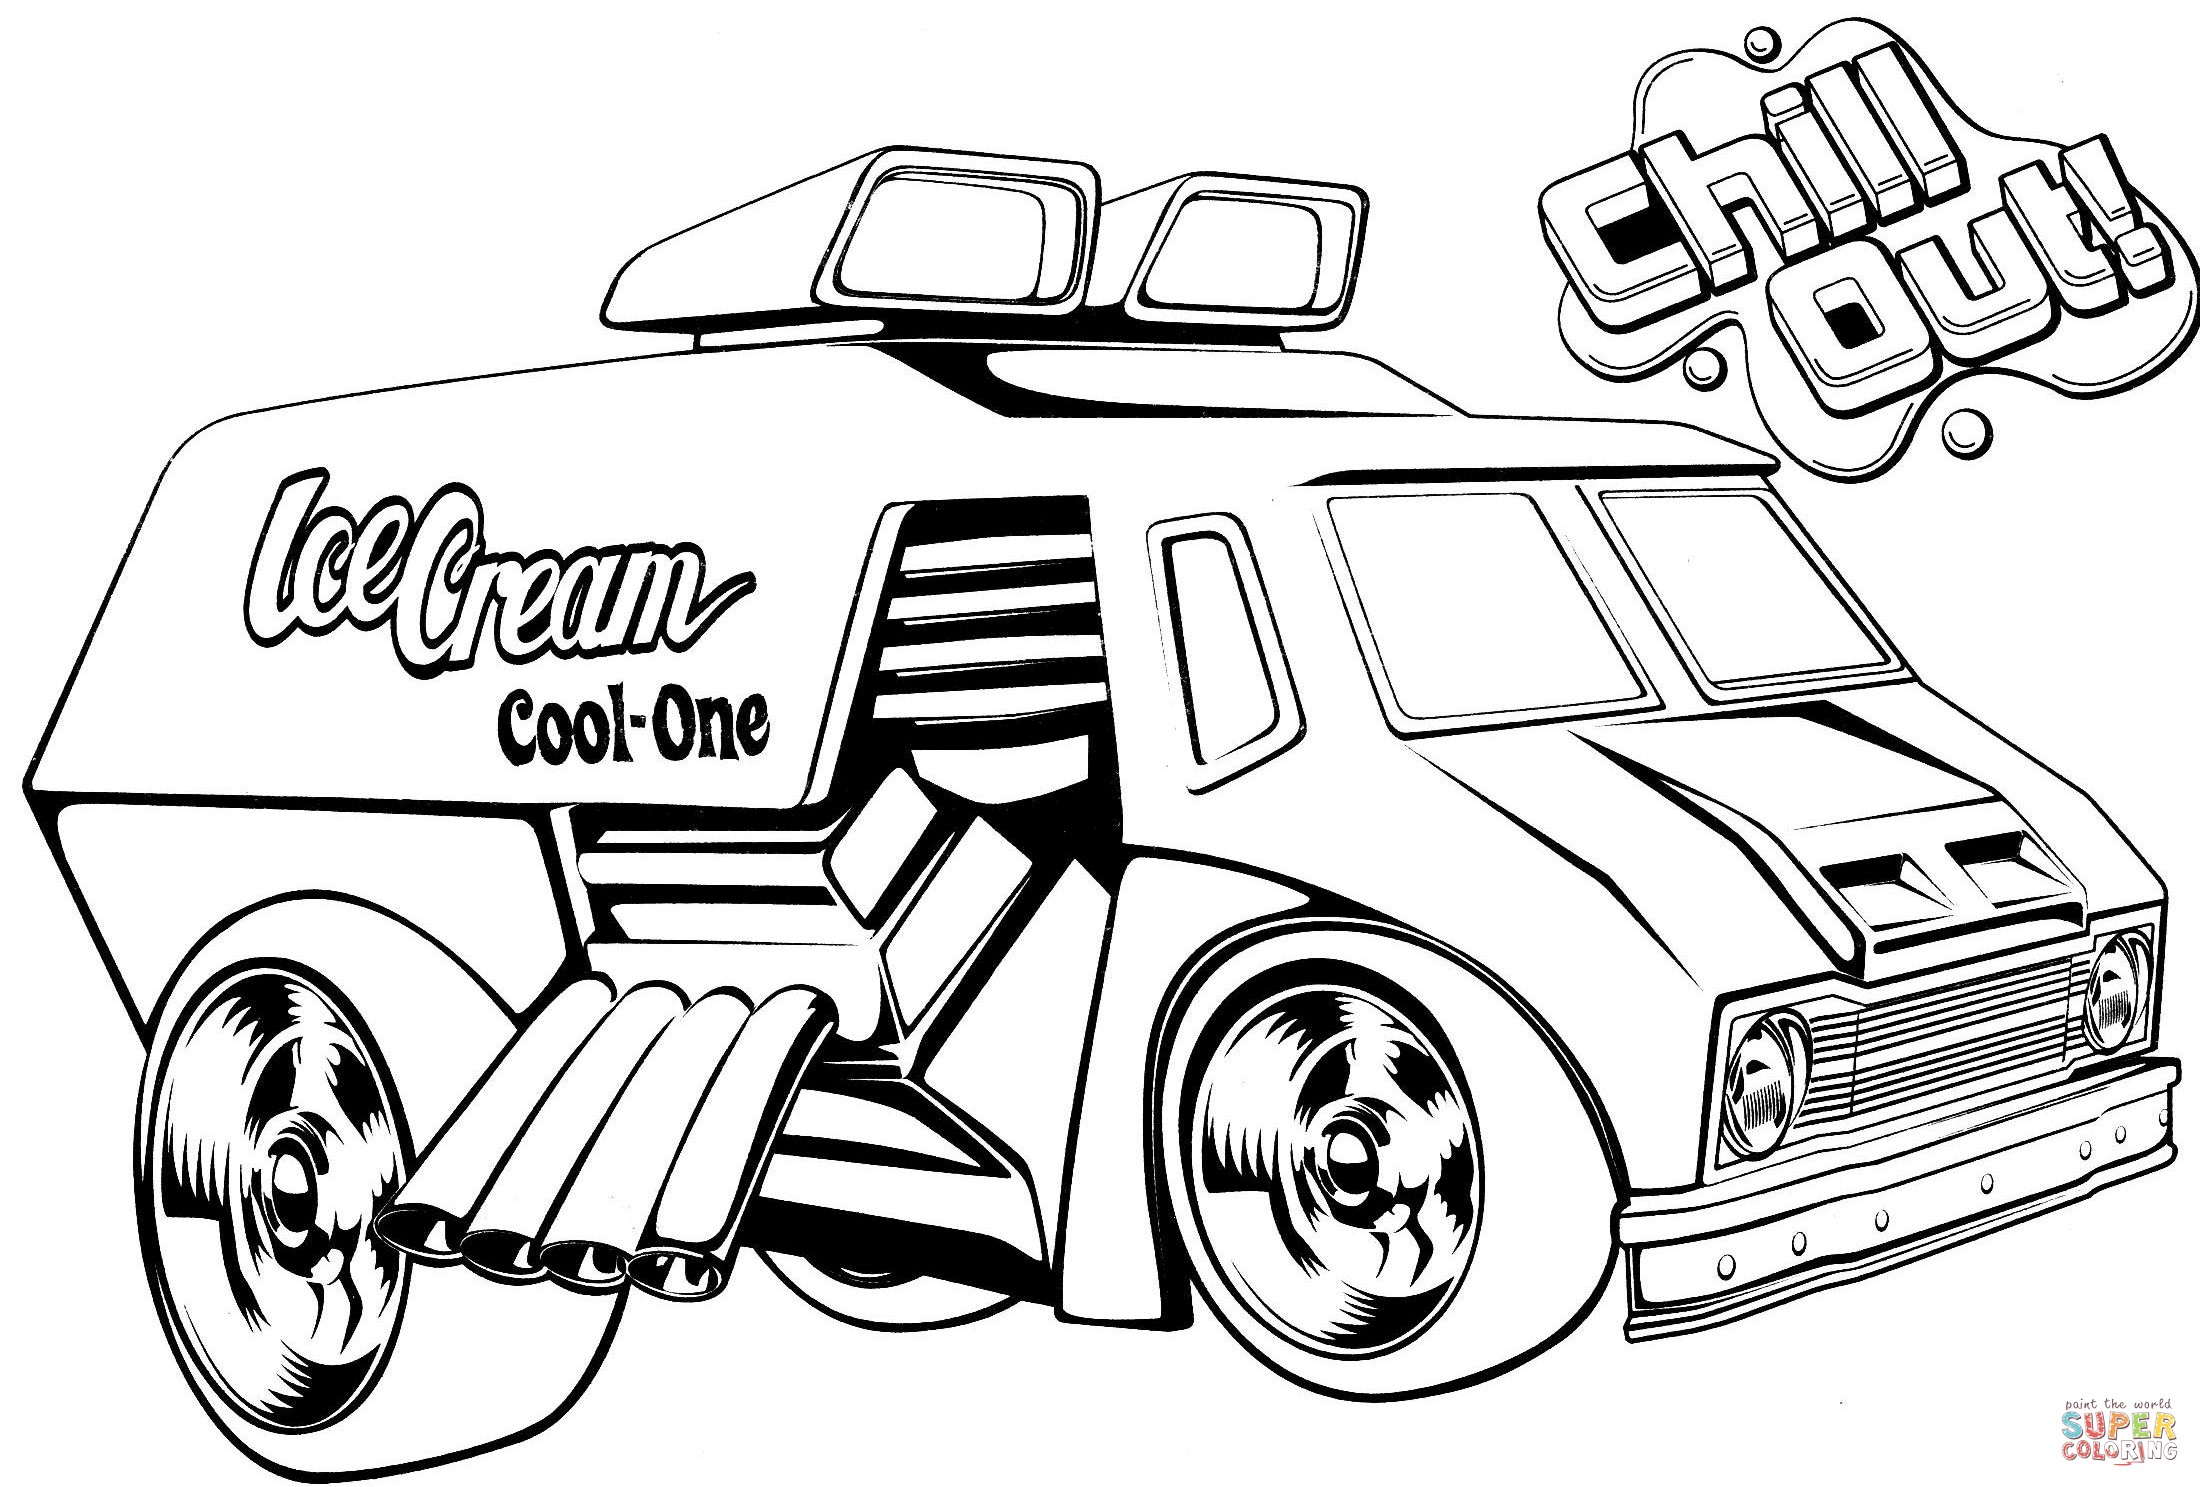 Car Wash Coloring Pages at GetColorings.com | Free printable colorings